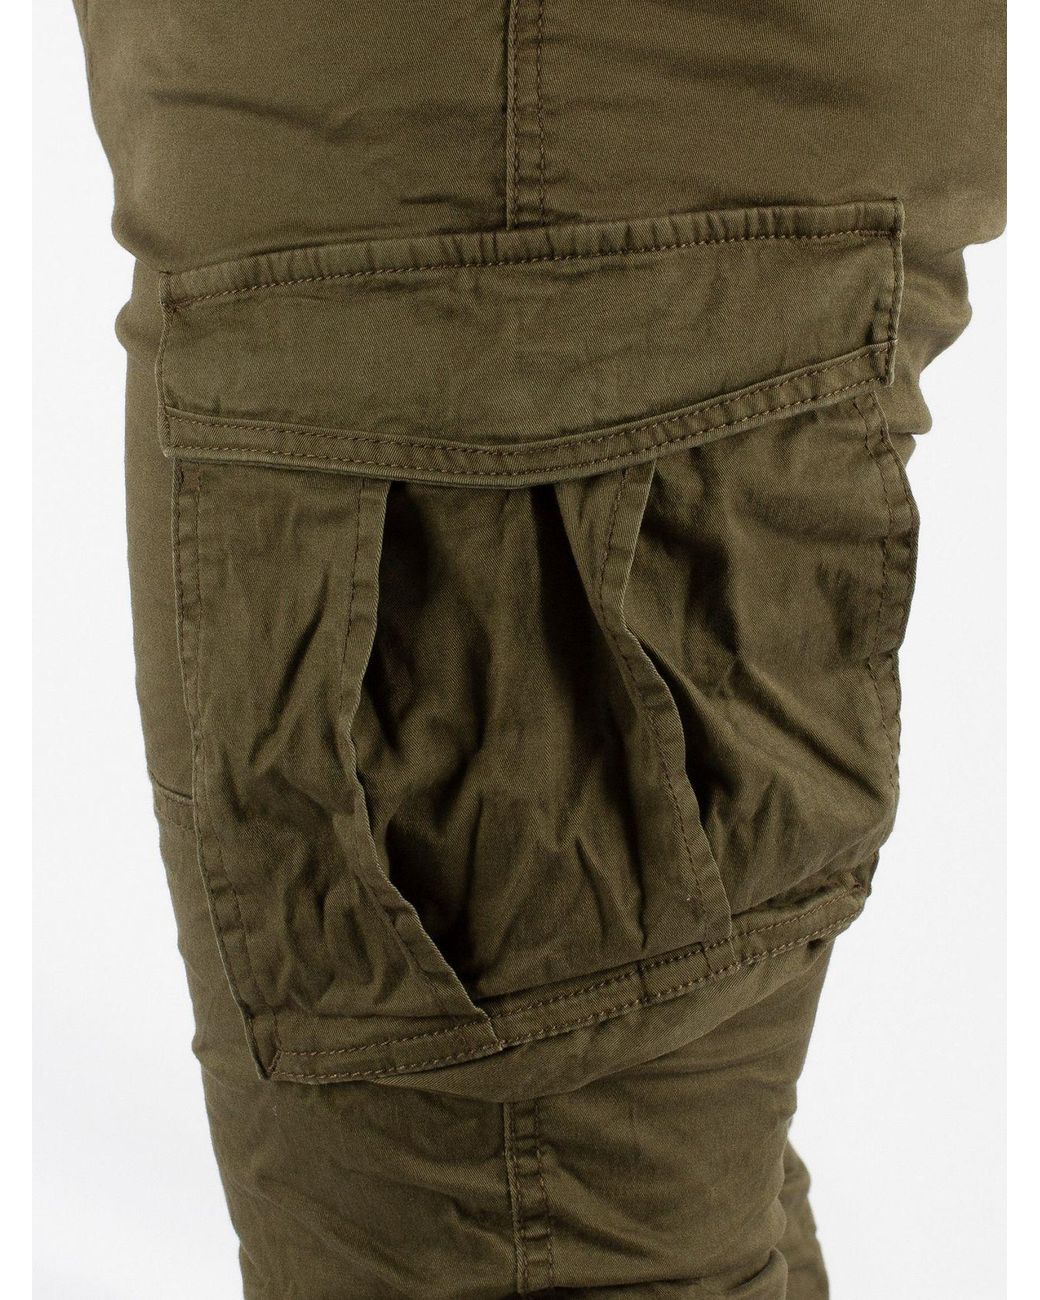 Jack Jones Paul Chop Cargo Pants Cheap Collection, 47% OFF | safenetfire.sg